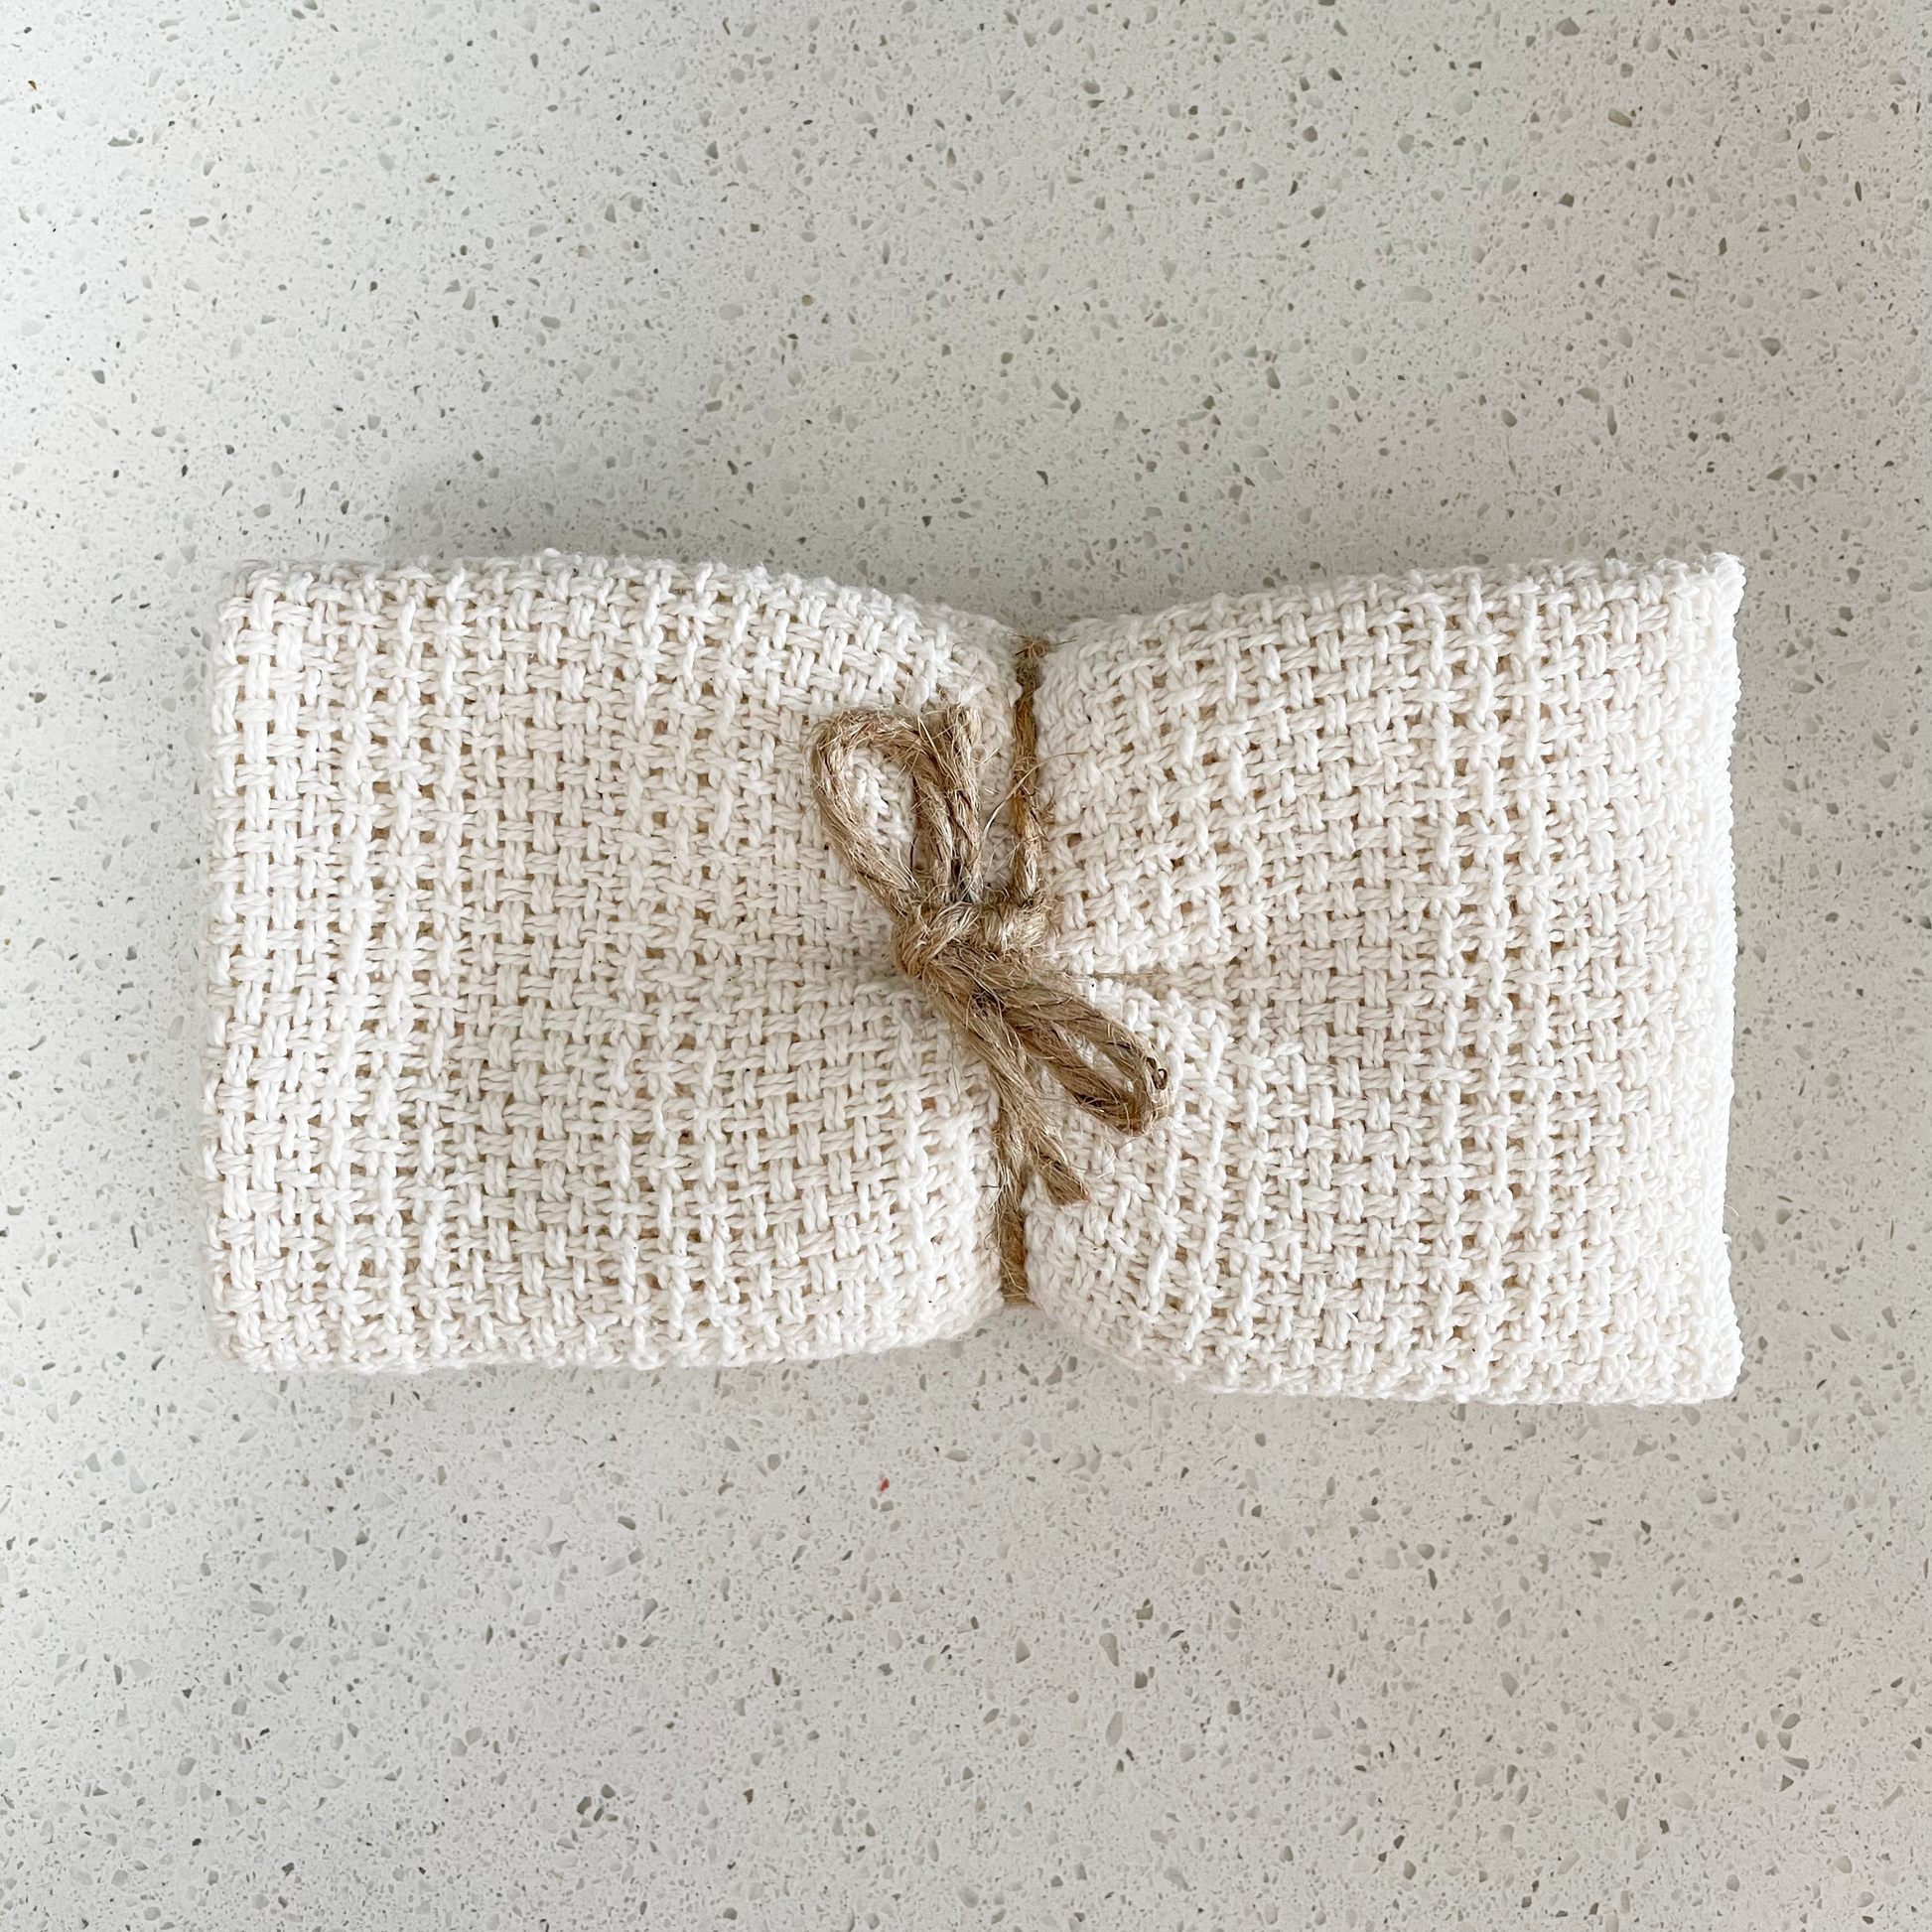 USA MADE Country Cottons Kitchen Towels Set / Asst